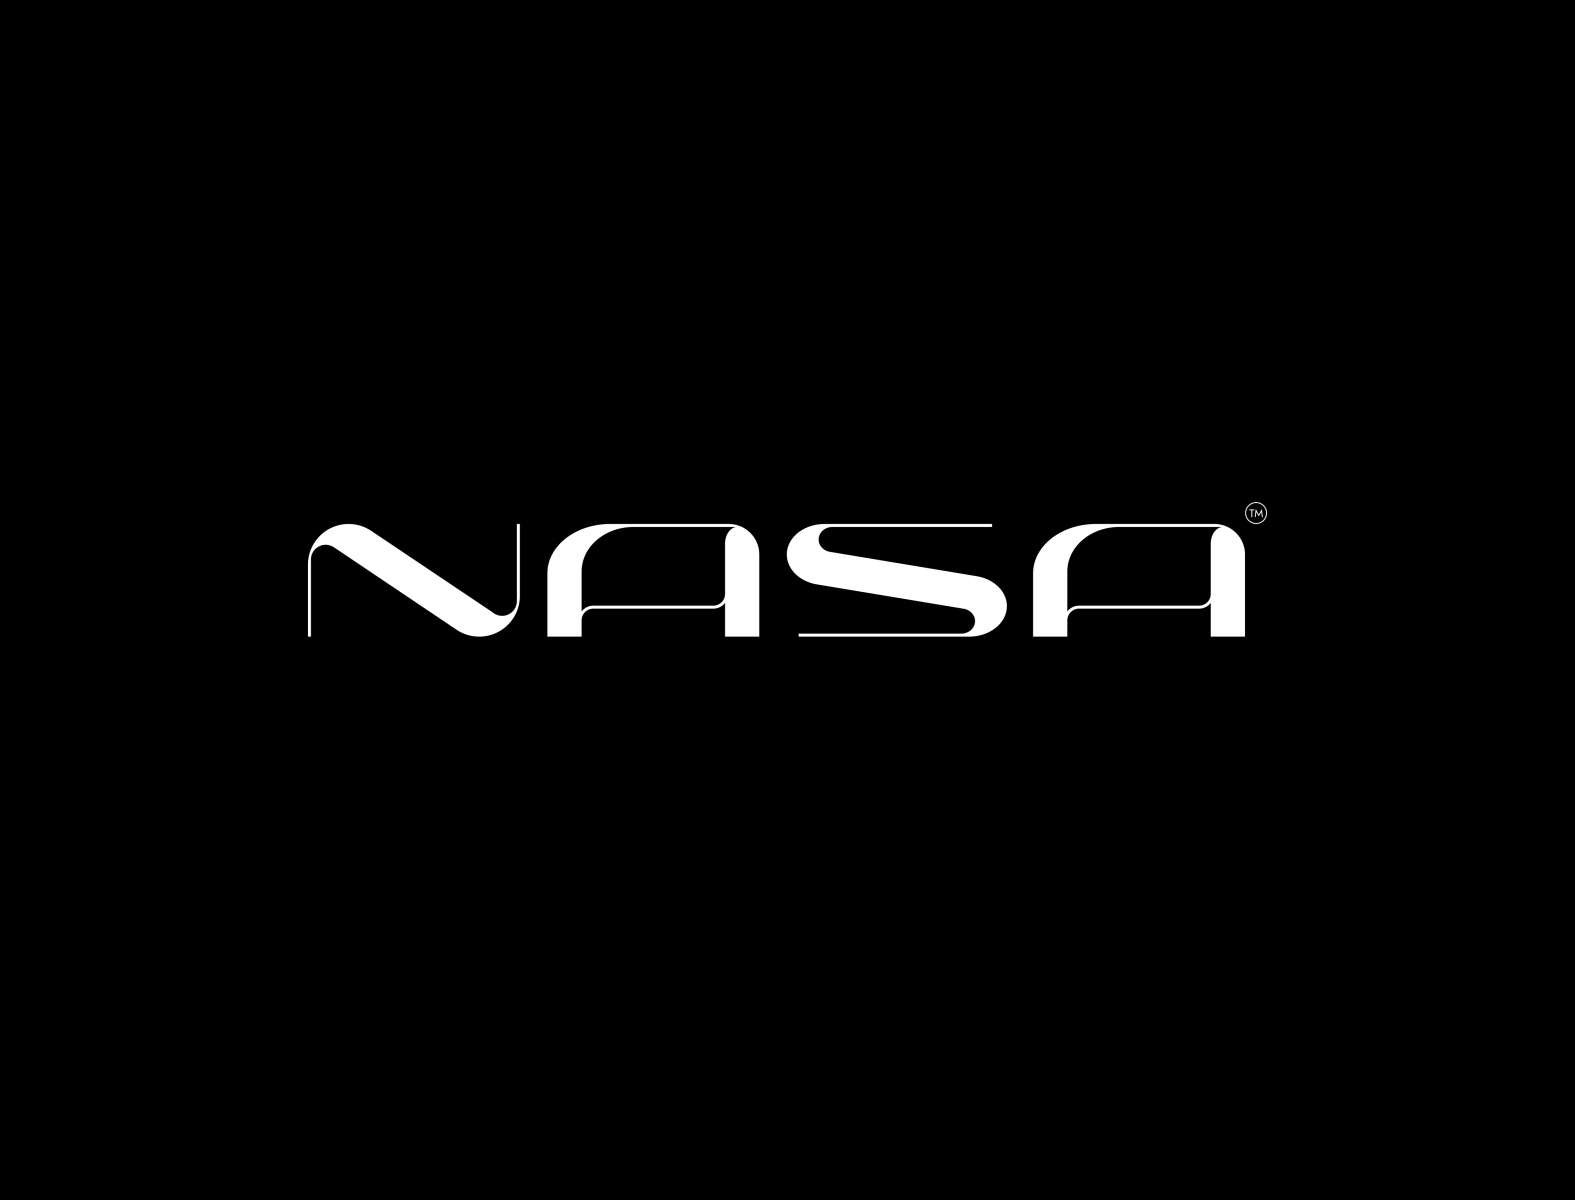 Nasa Custom wordmark logo by Biswajit Guchait on Dribbble